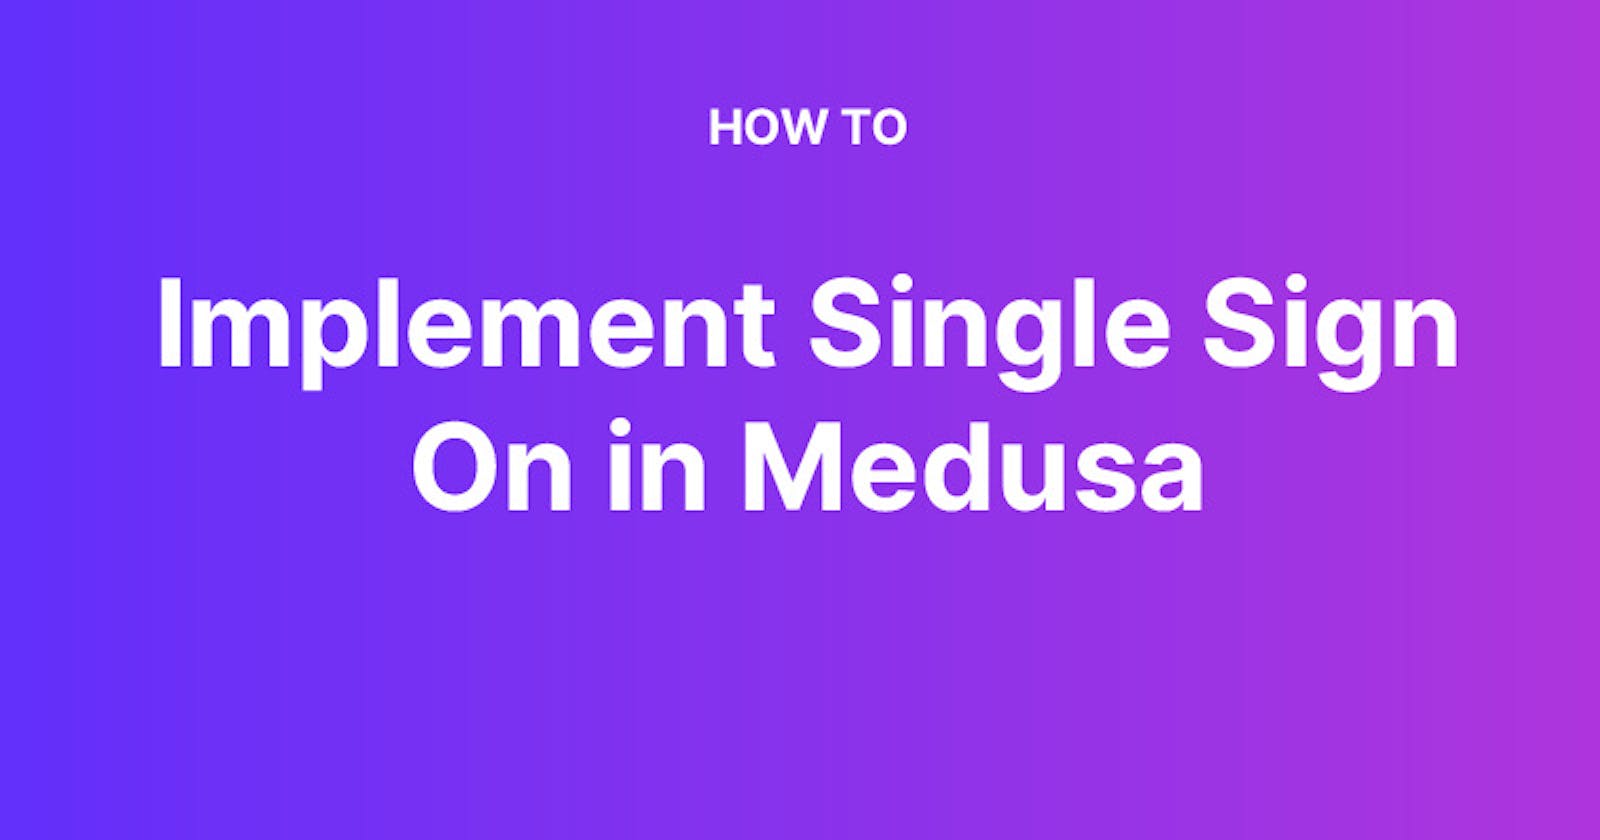 Implement Single Sign On in Medusa